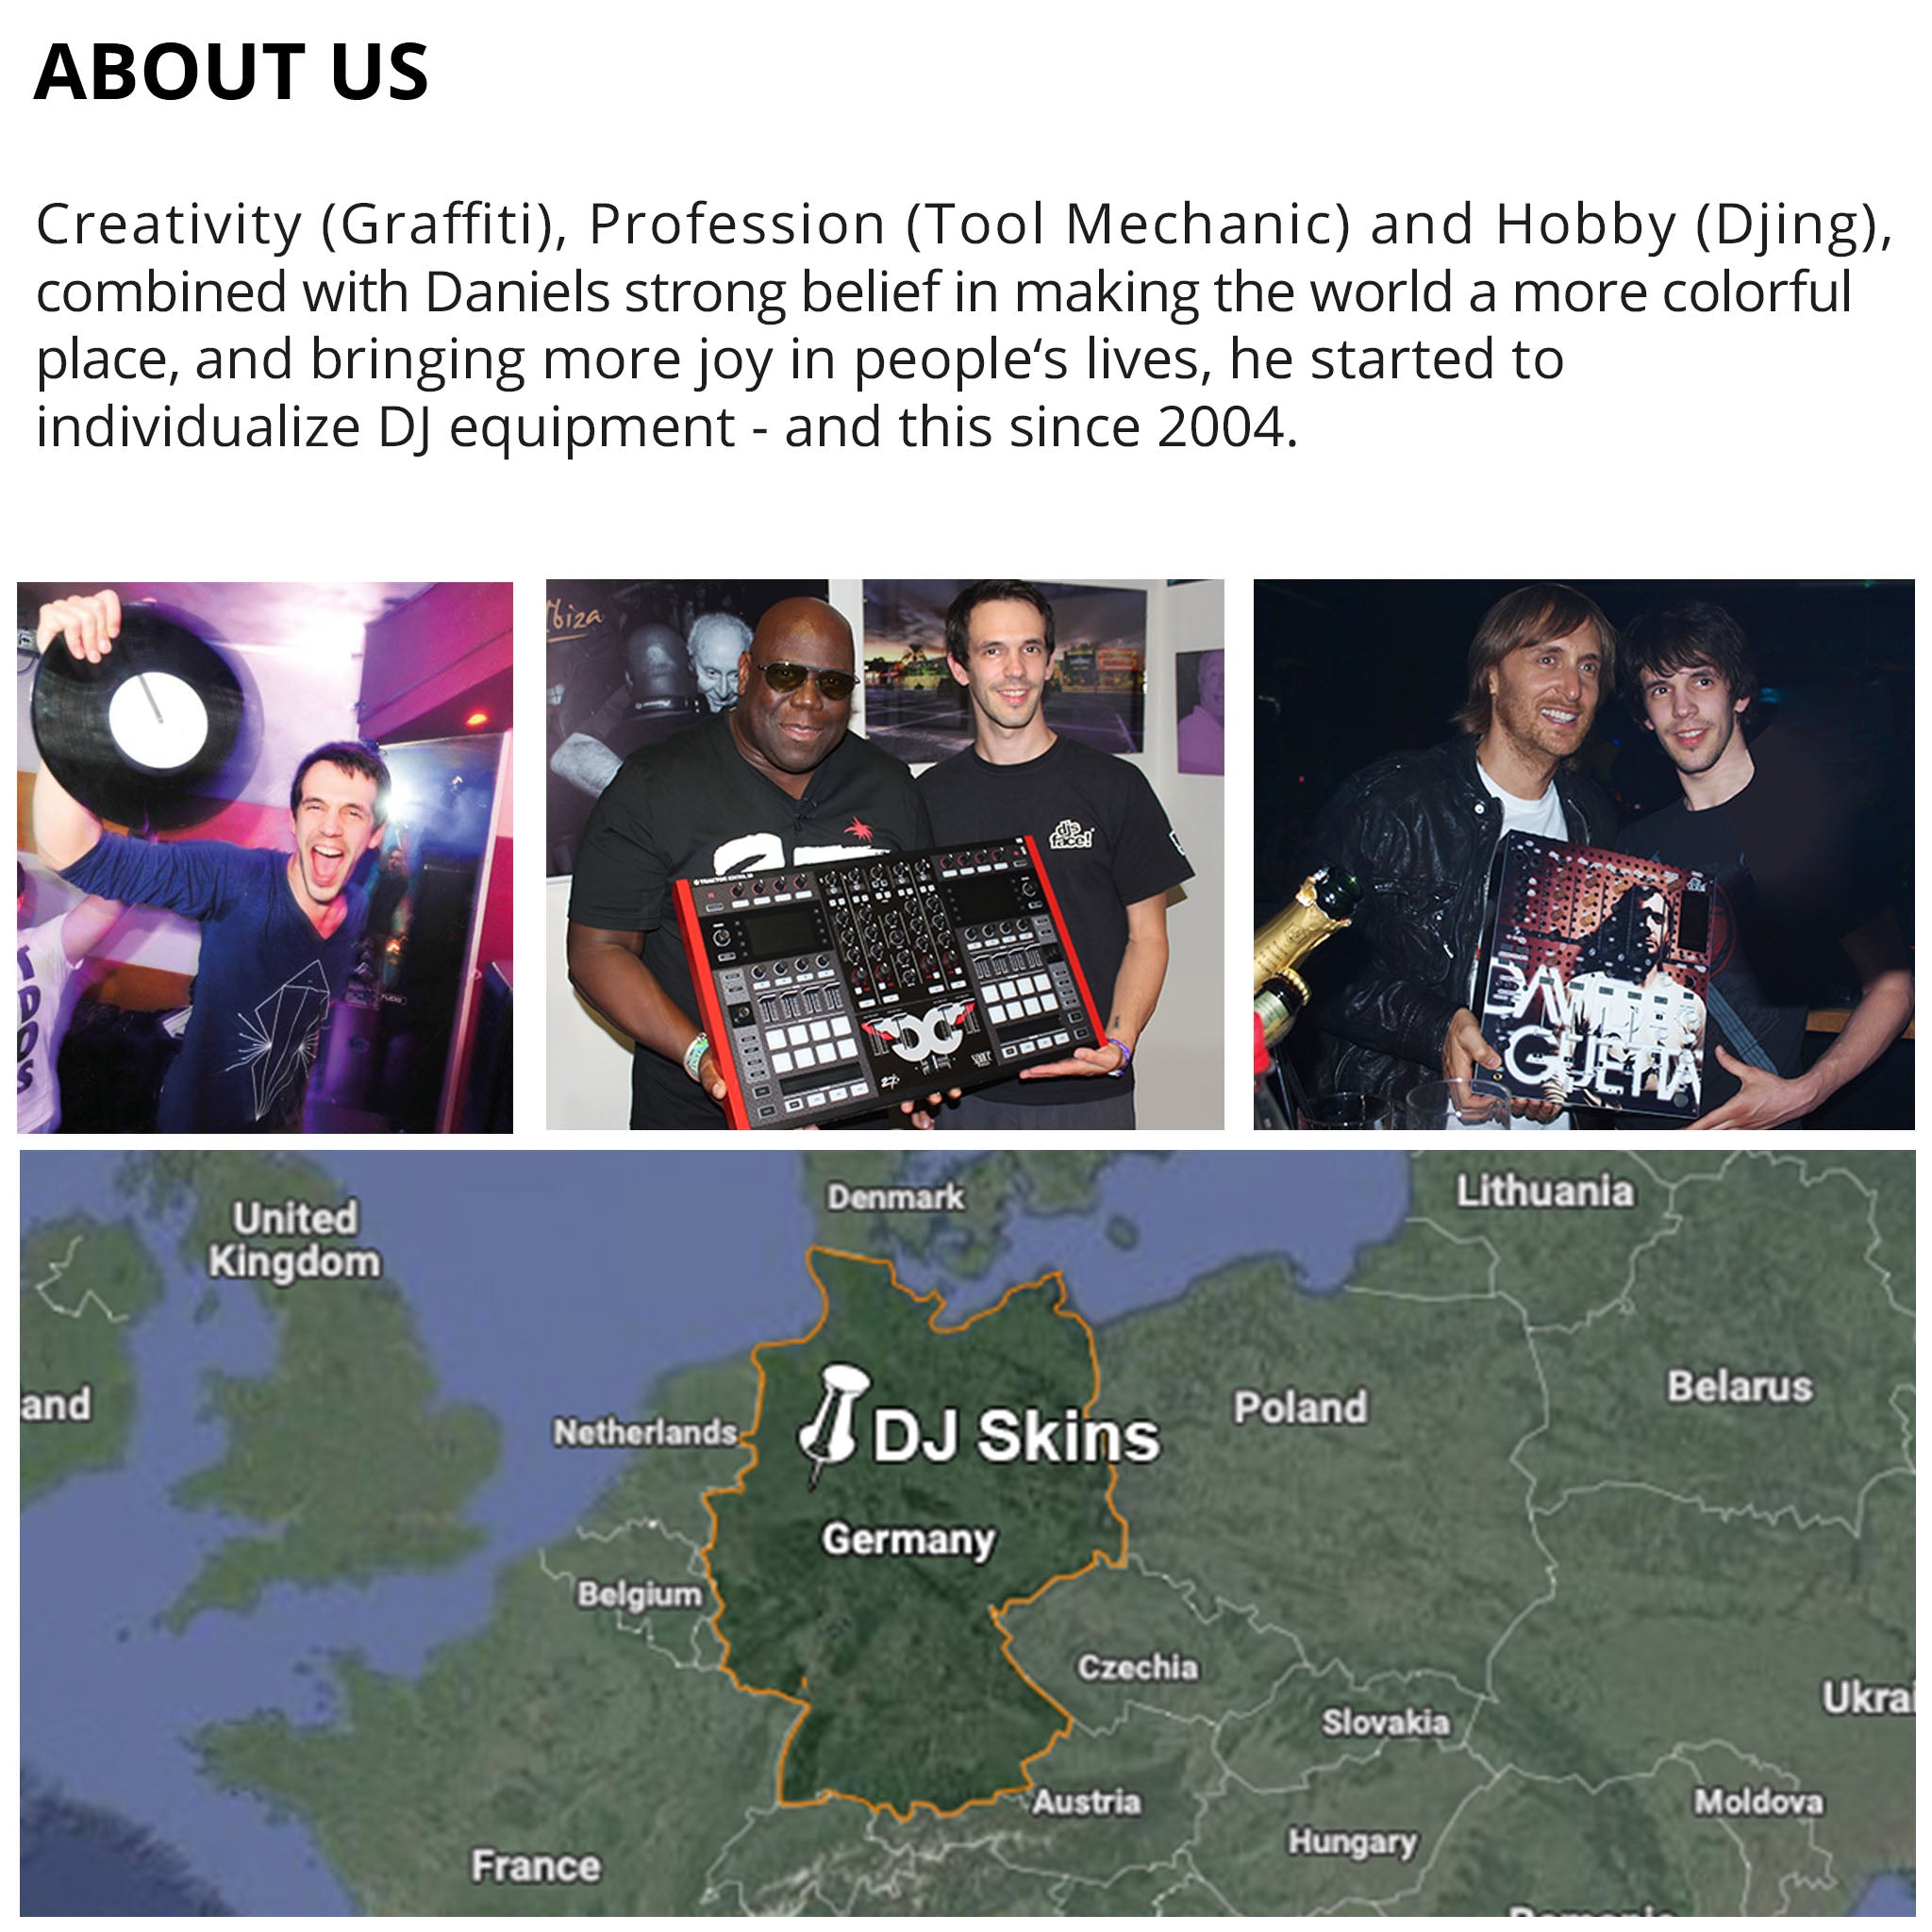 Pioneer DJ DJM 900 NEXUS 2 Skin Multisynth